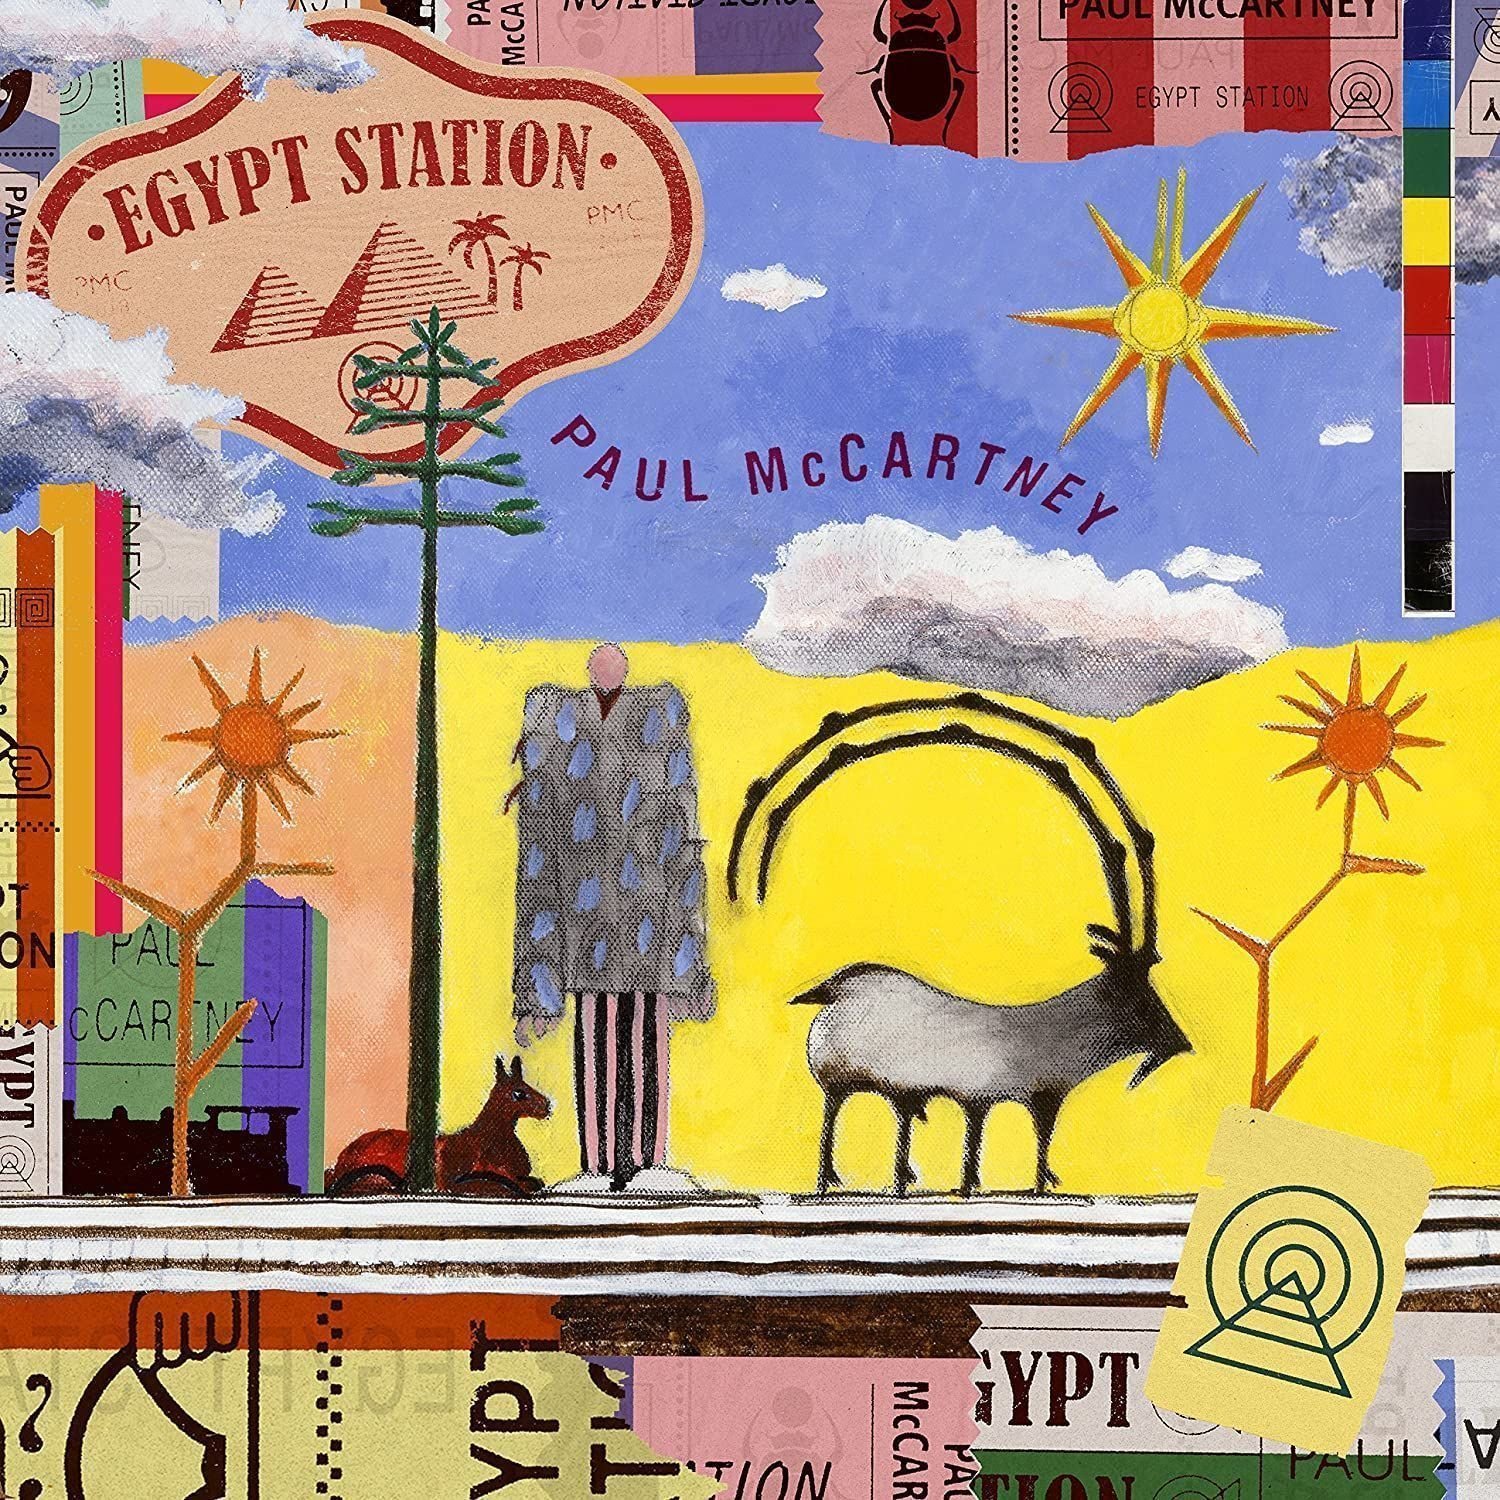 Paul McCartney - Egypt Station (2 LP) Paul McCartney